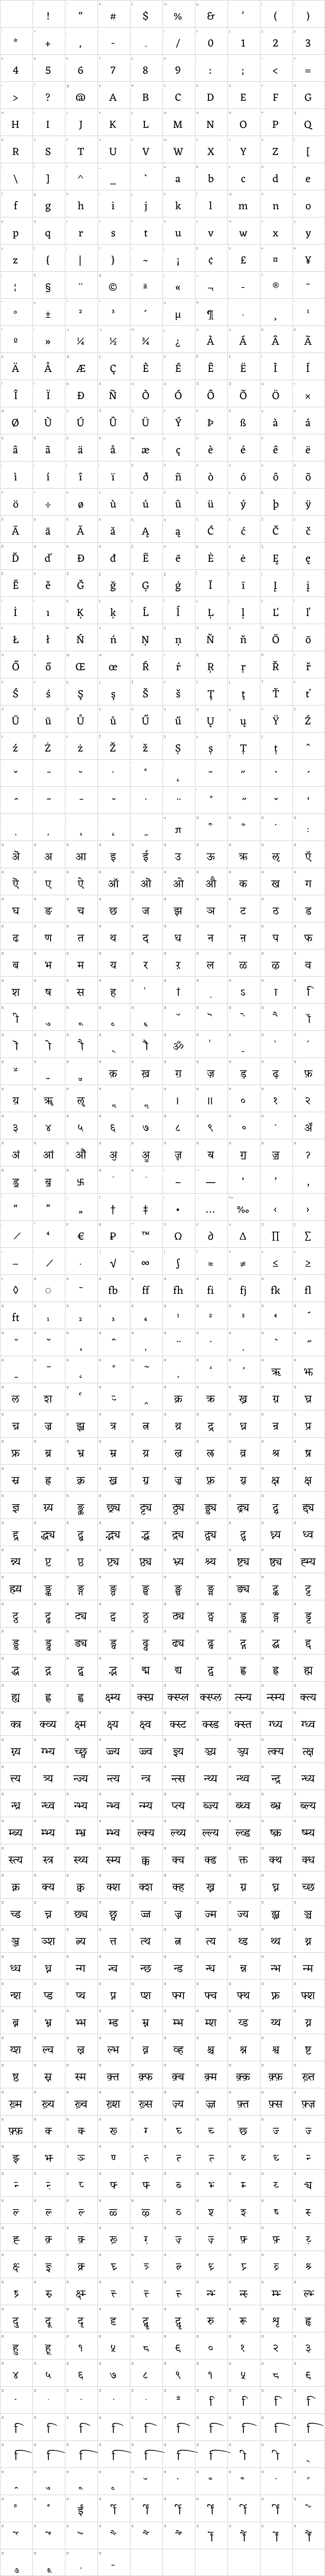 Eczar Font Free By Rosetta Font Squirrel